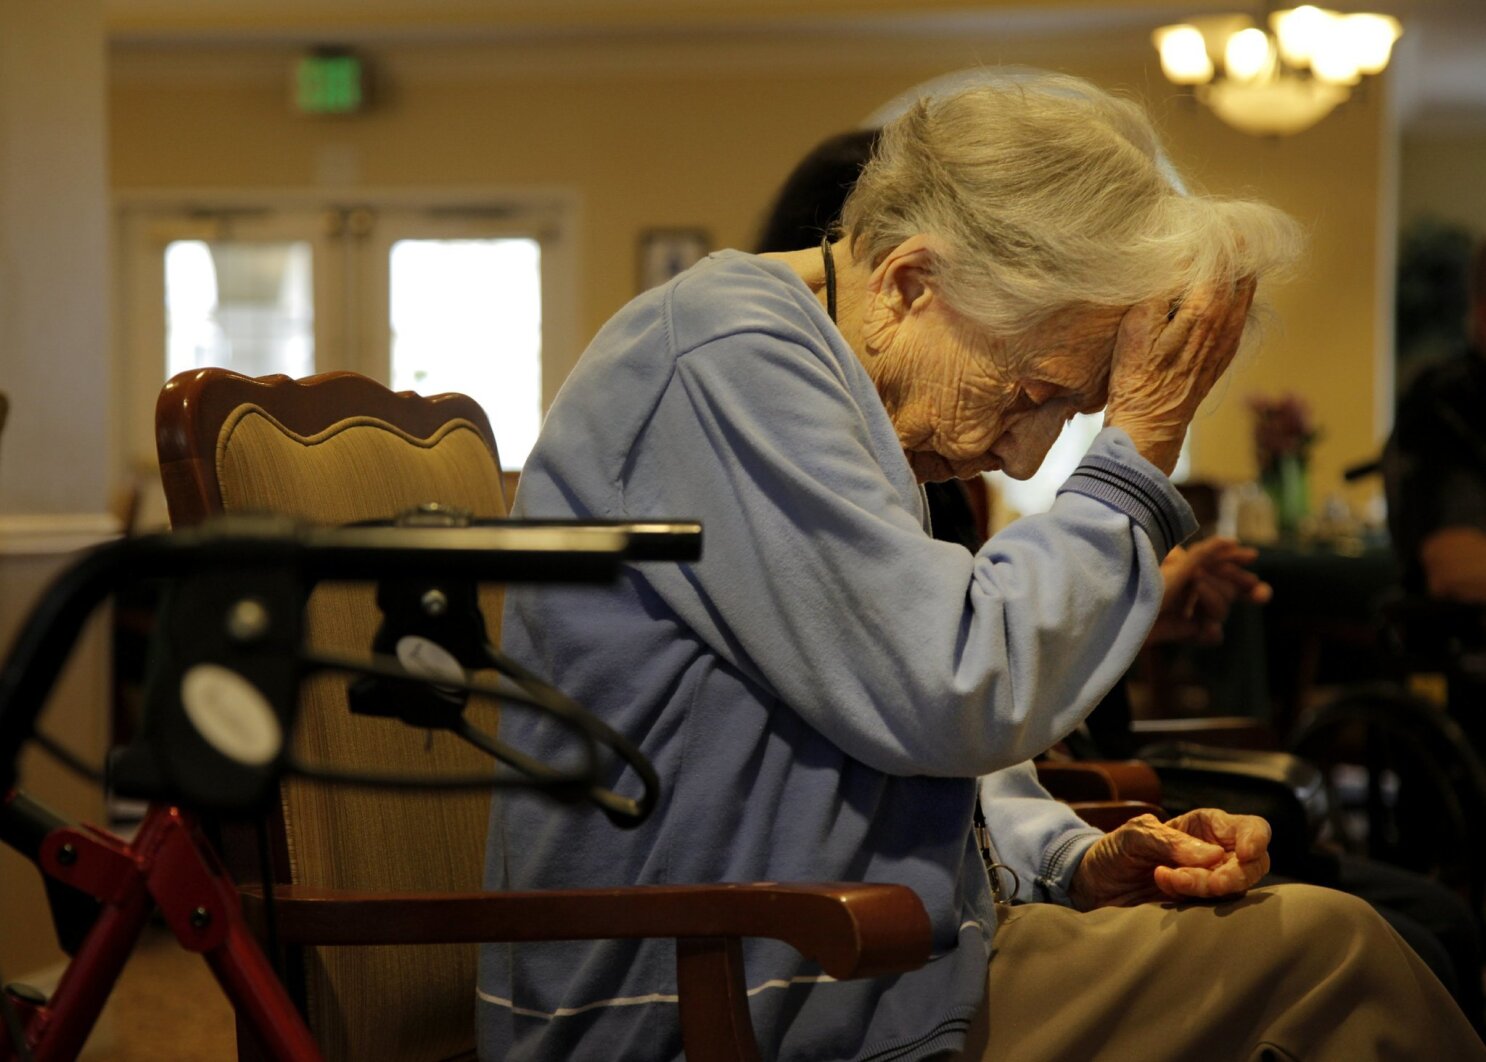 Care Home Deaths Show System Failures The San Diego Union Tribune